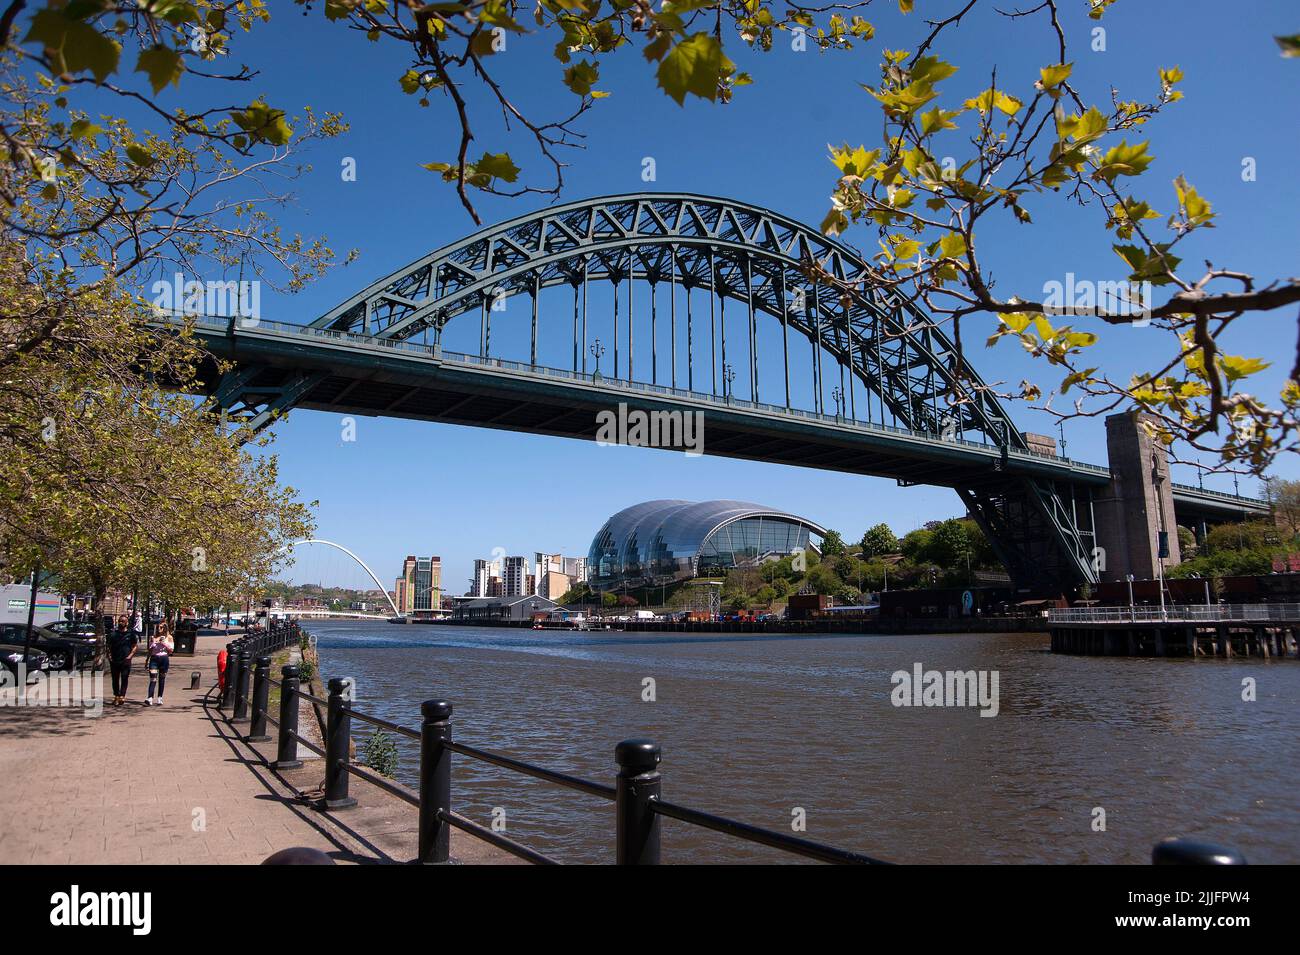 The Tyne Bridge, Newcastle Gateshead, United Kingdom Stock Photo